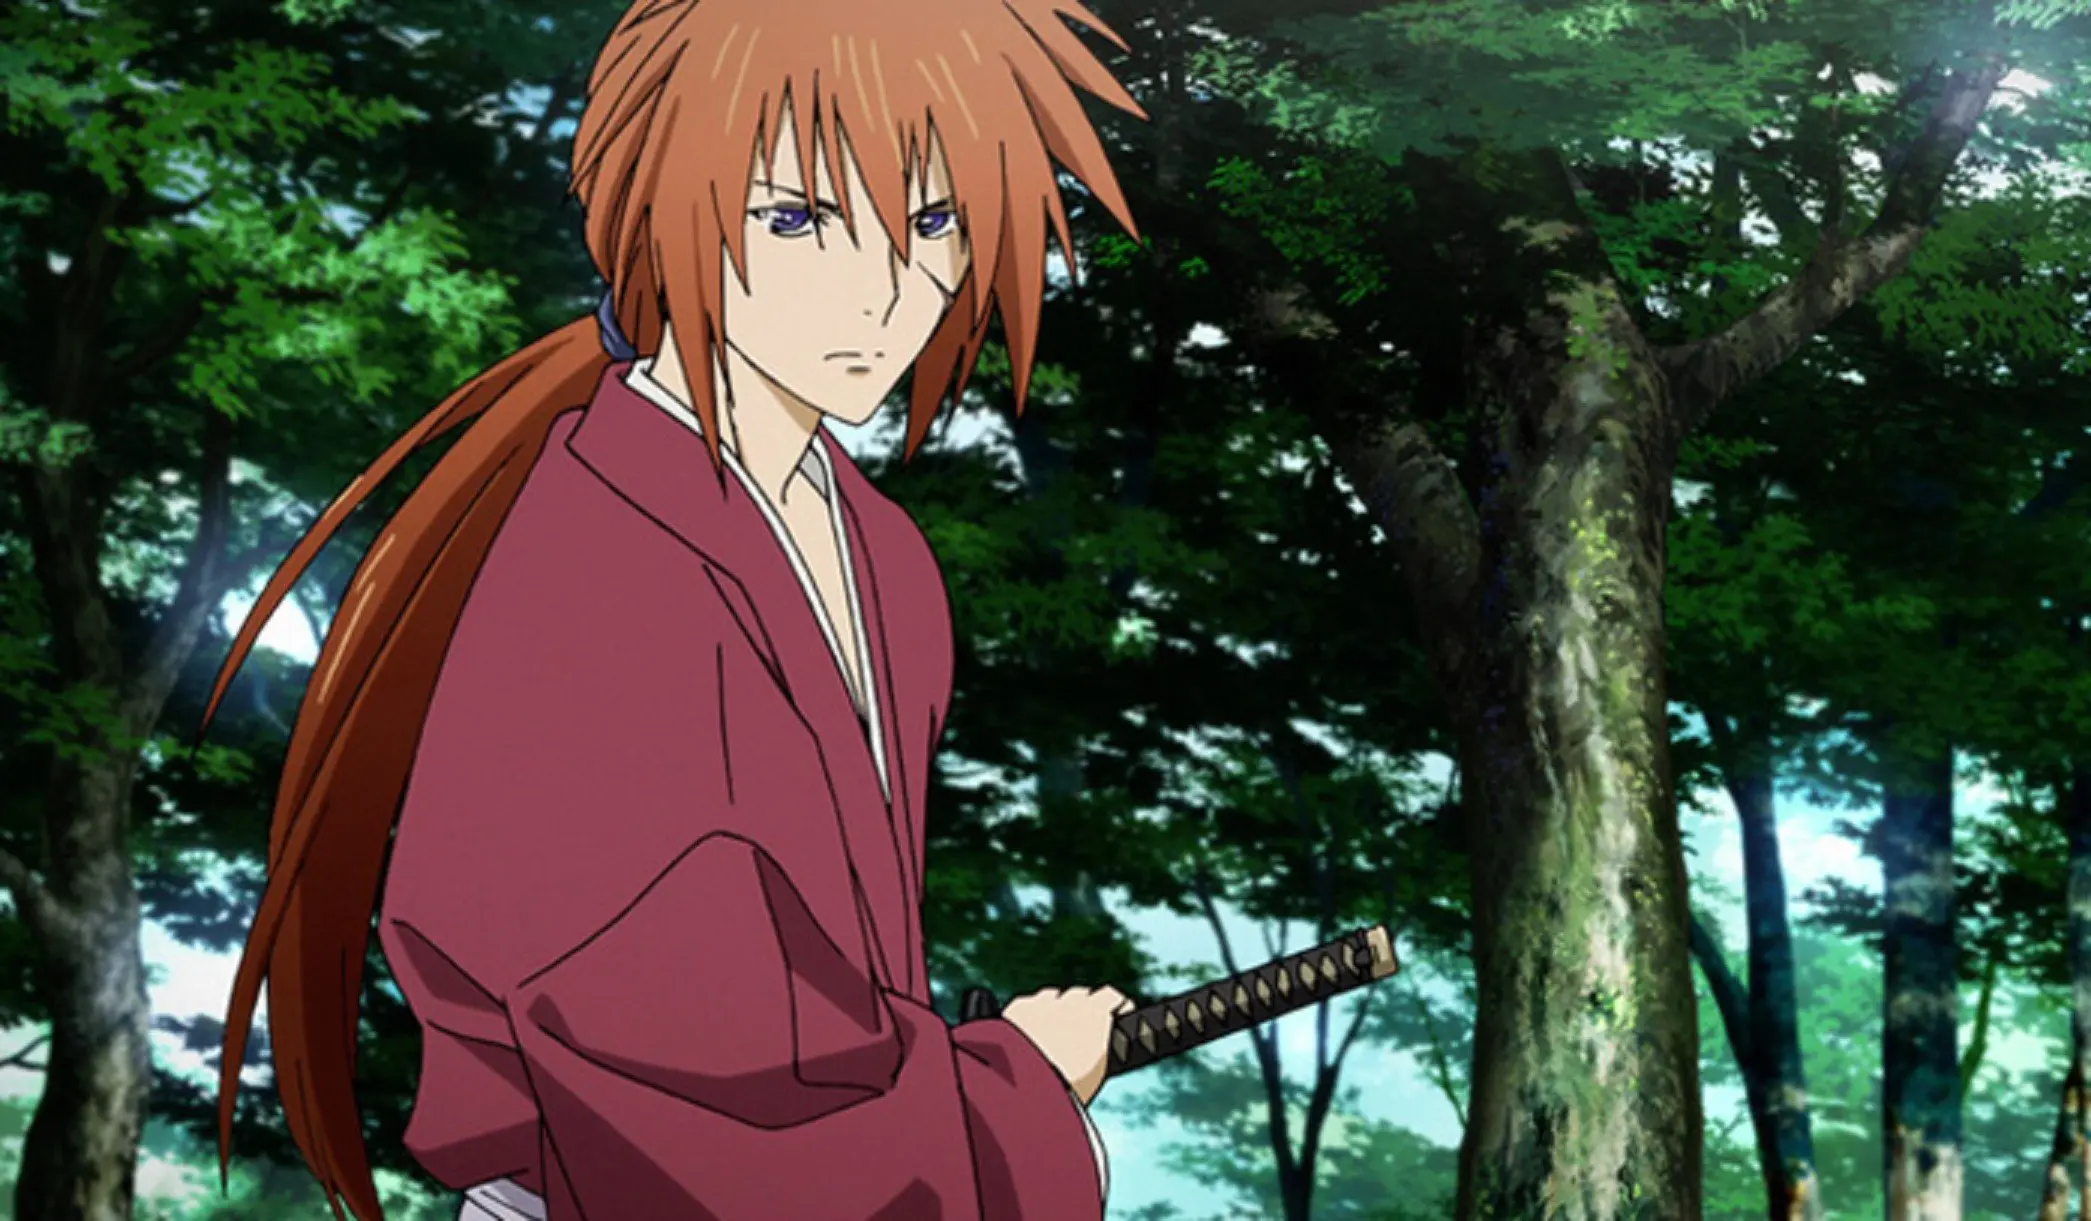 Kenshin Himura, karakter utama dalam anime Samurai X.